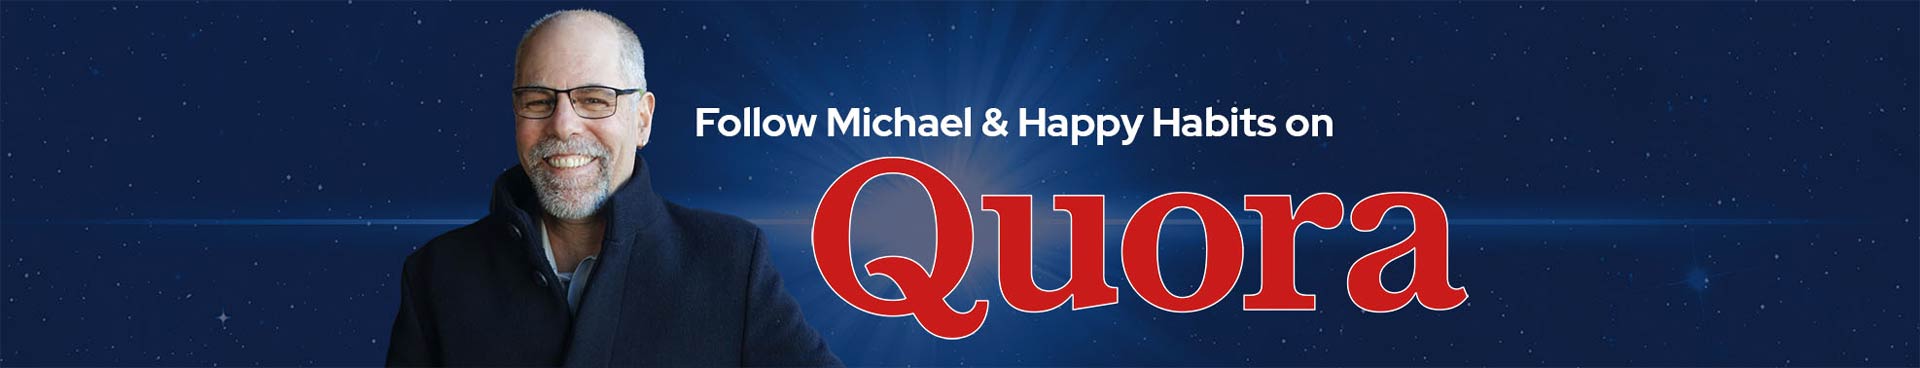 Follow Michael & Happy Habits on Quora